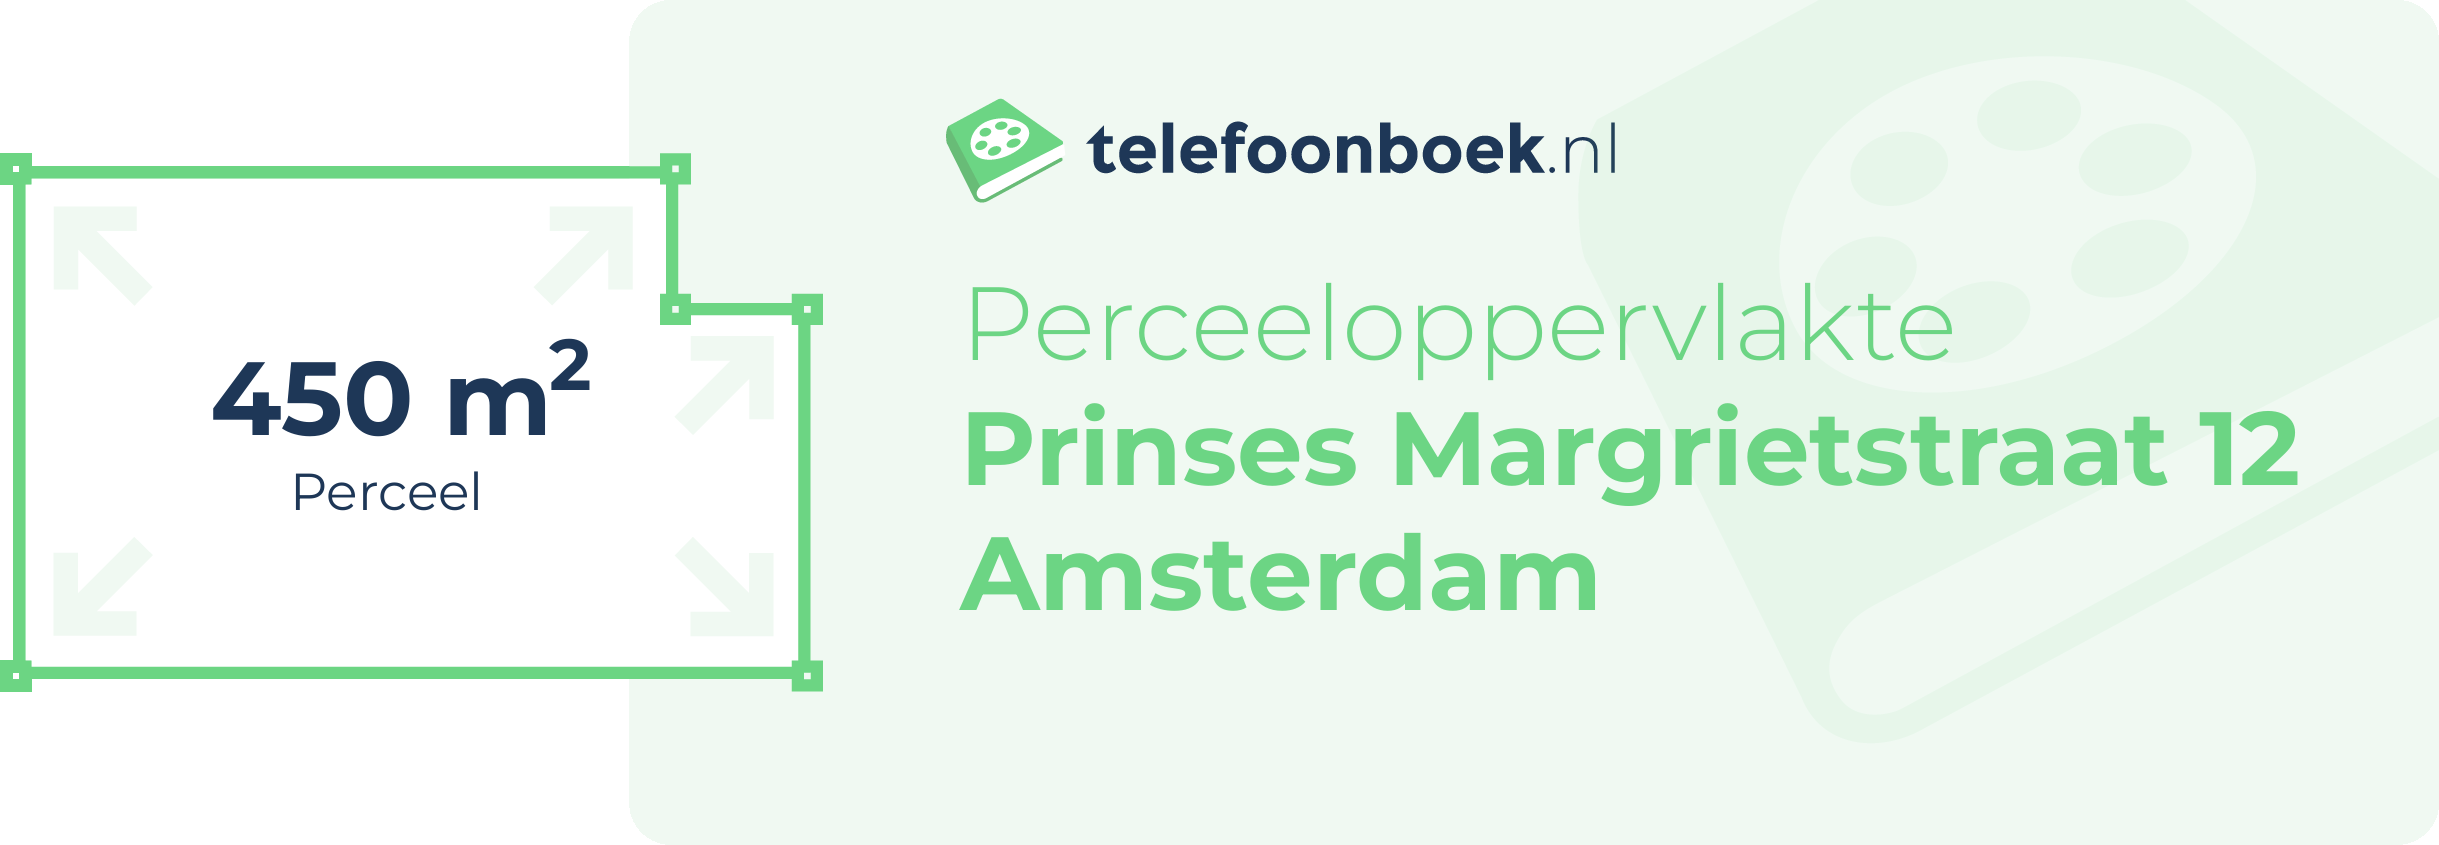 Perceeloppervlakte Prinses Margrietstraat 12 Amsterdam